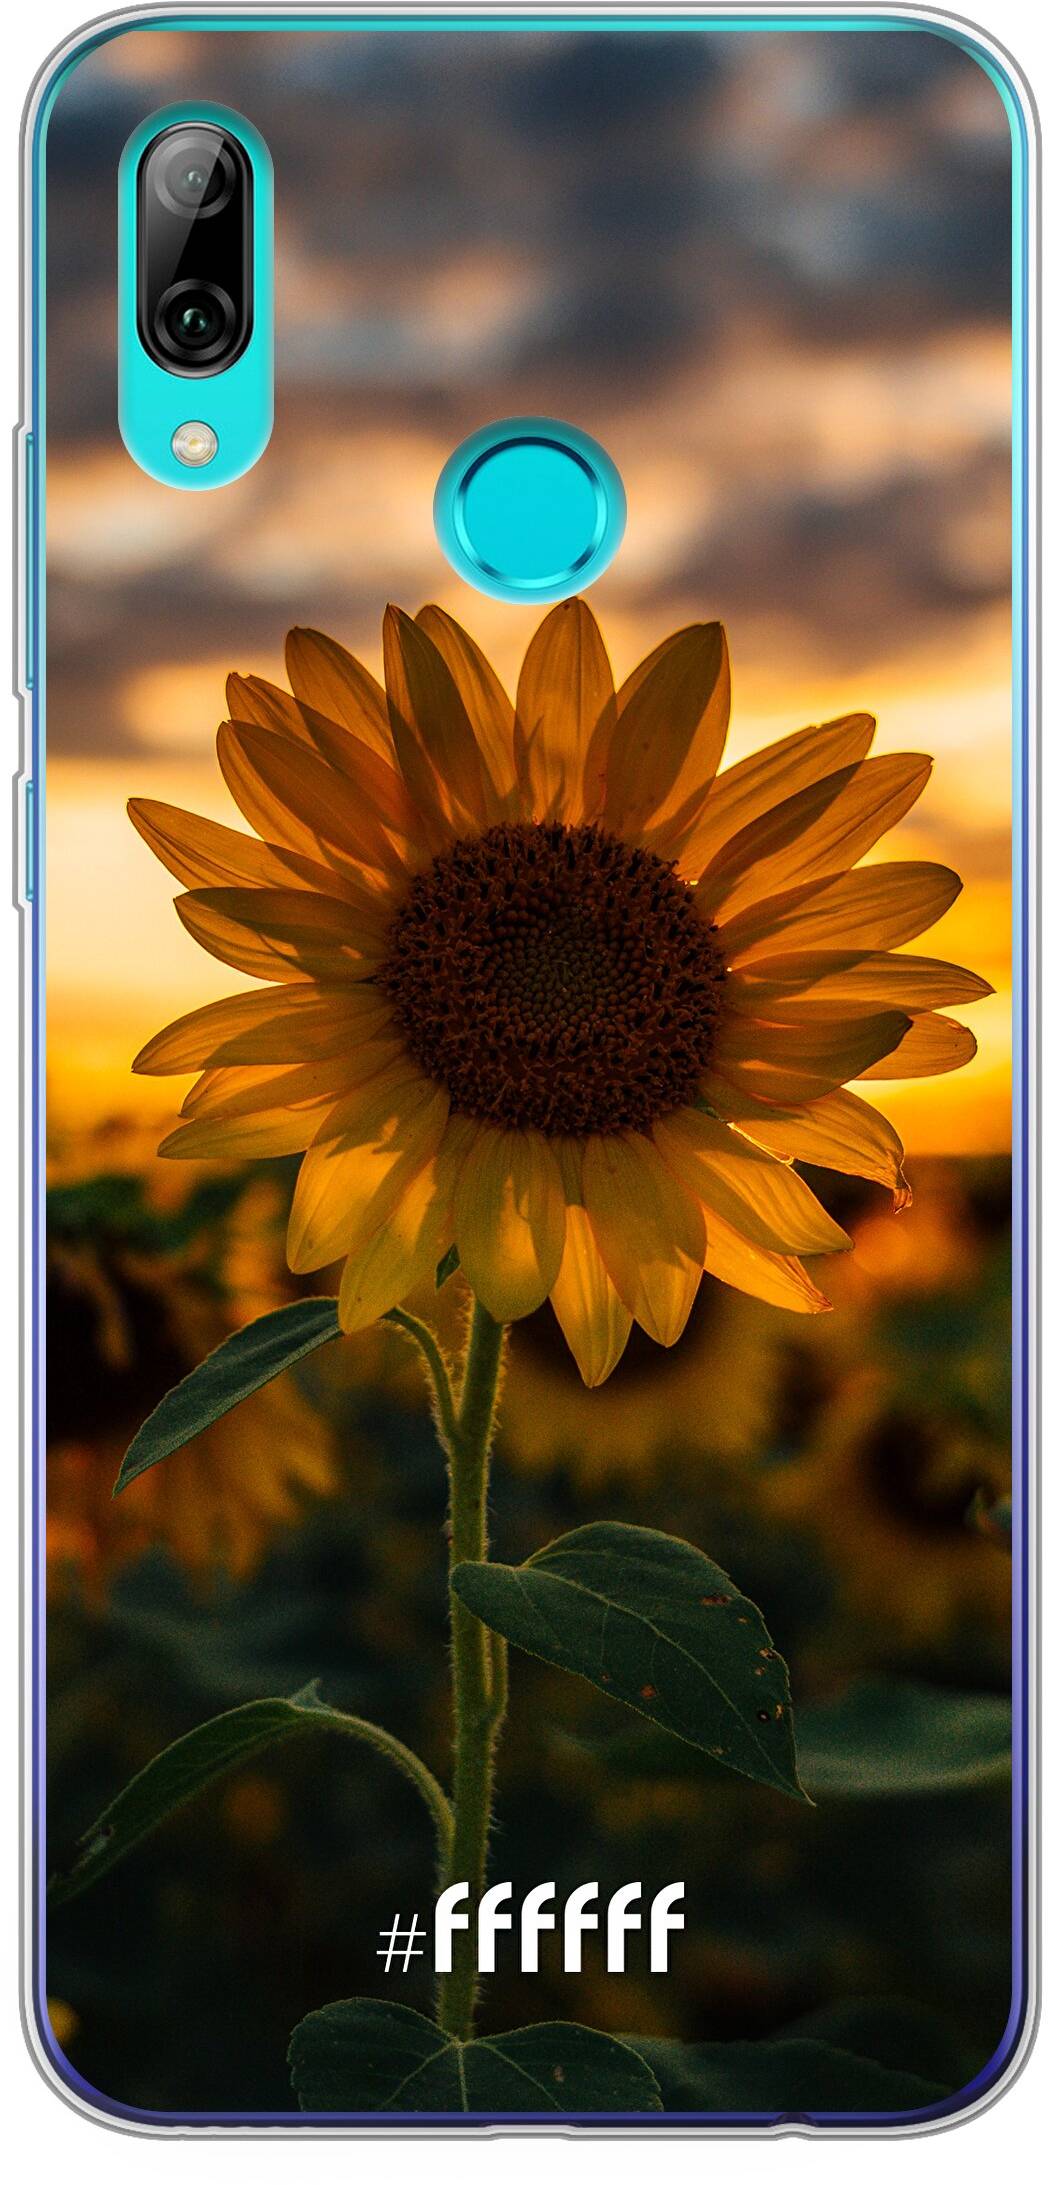 Sunset Sunflower P Smart (2019)